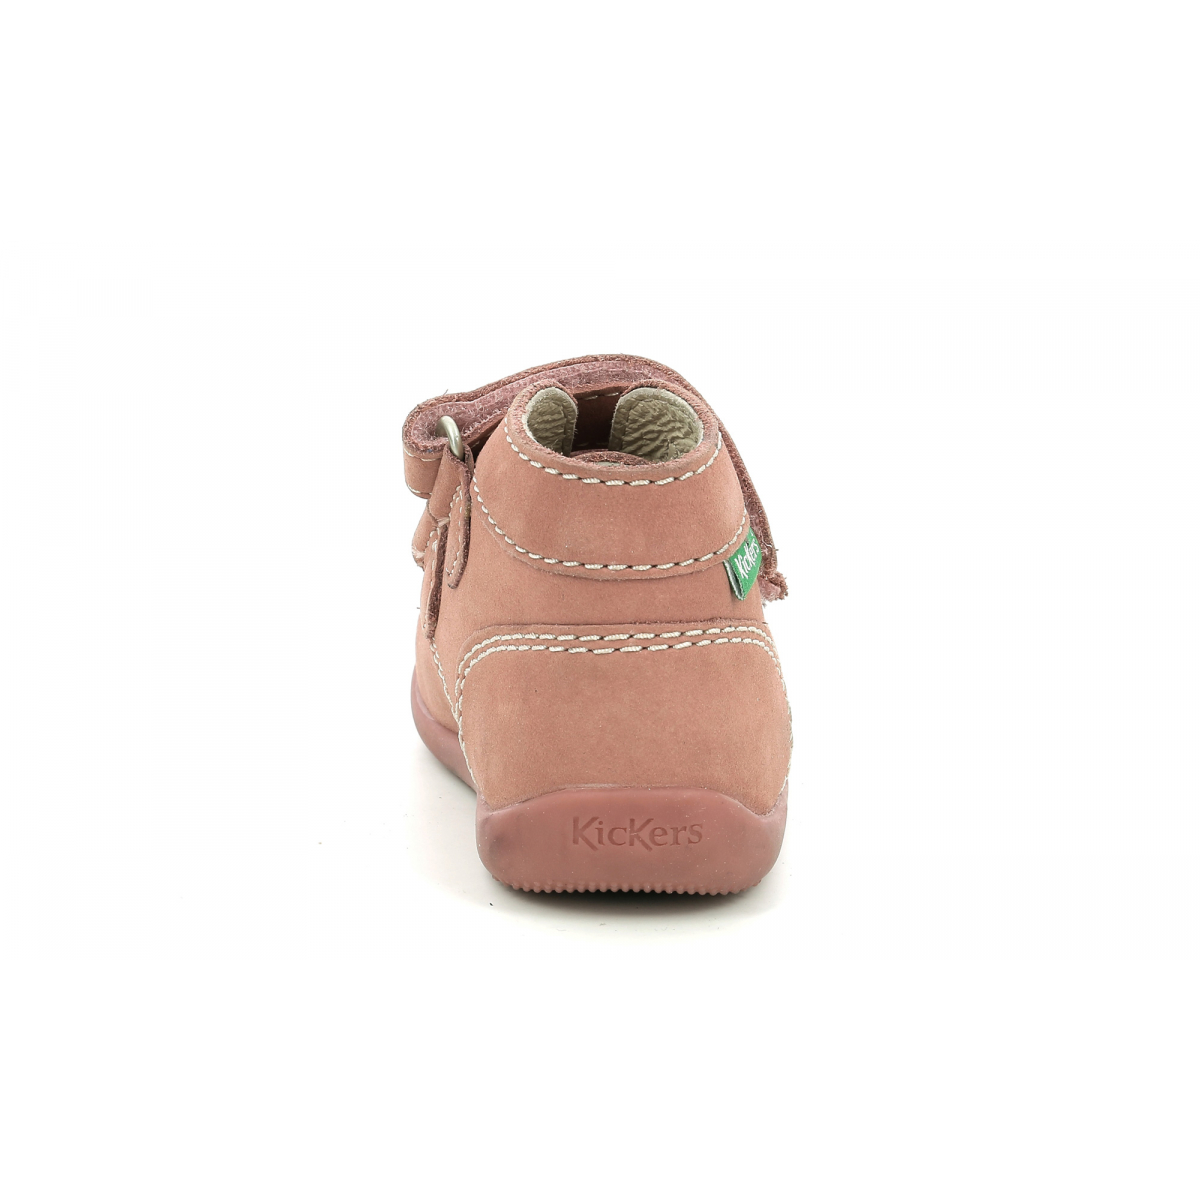 Kickers Baby Girls’ Bonkro-2 Boots